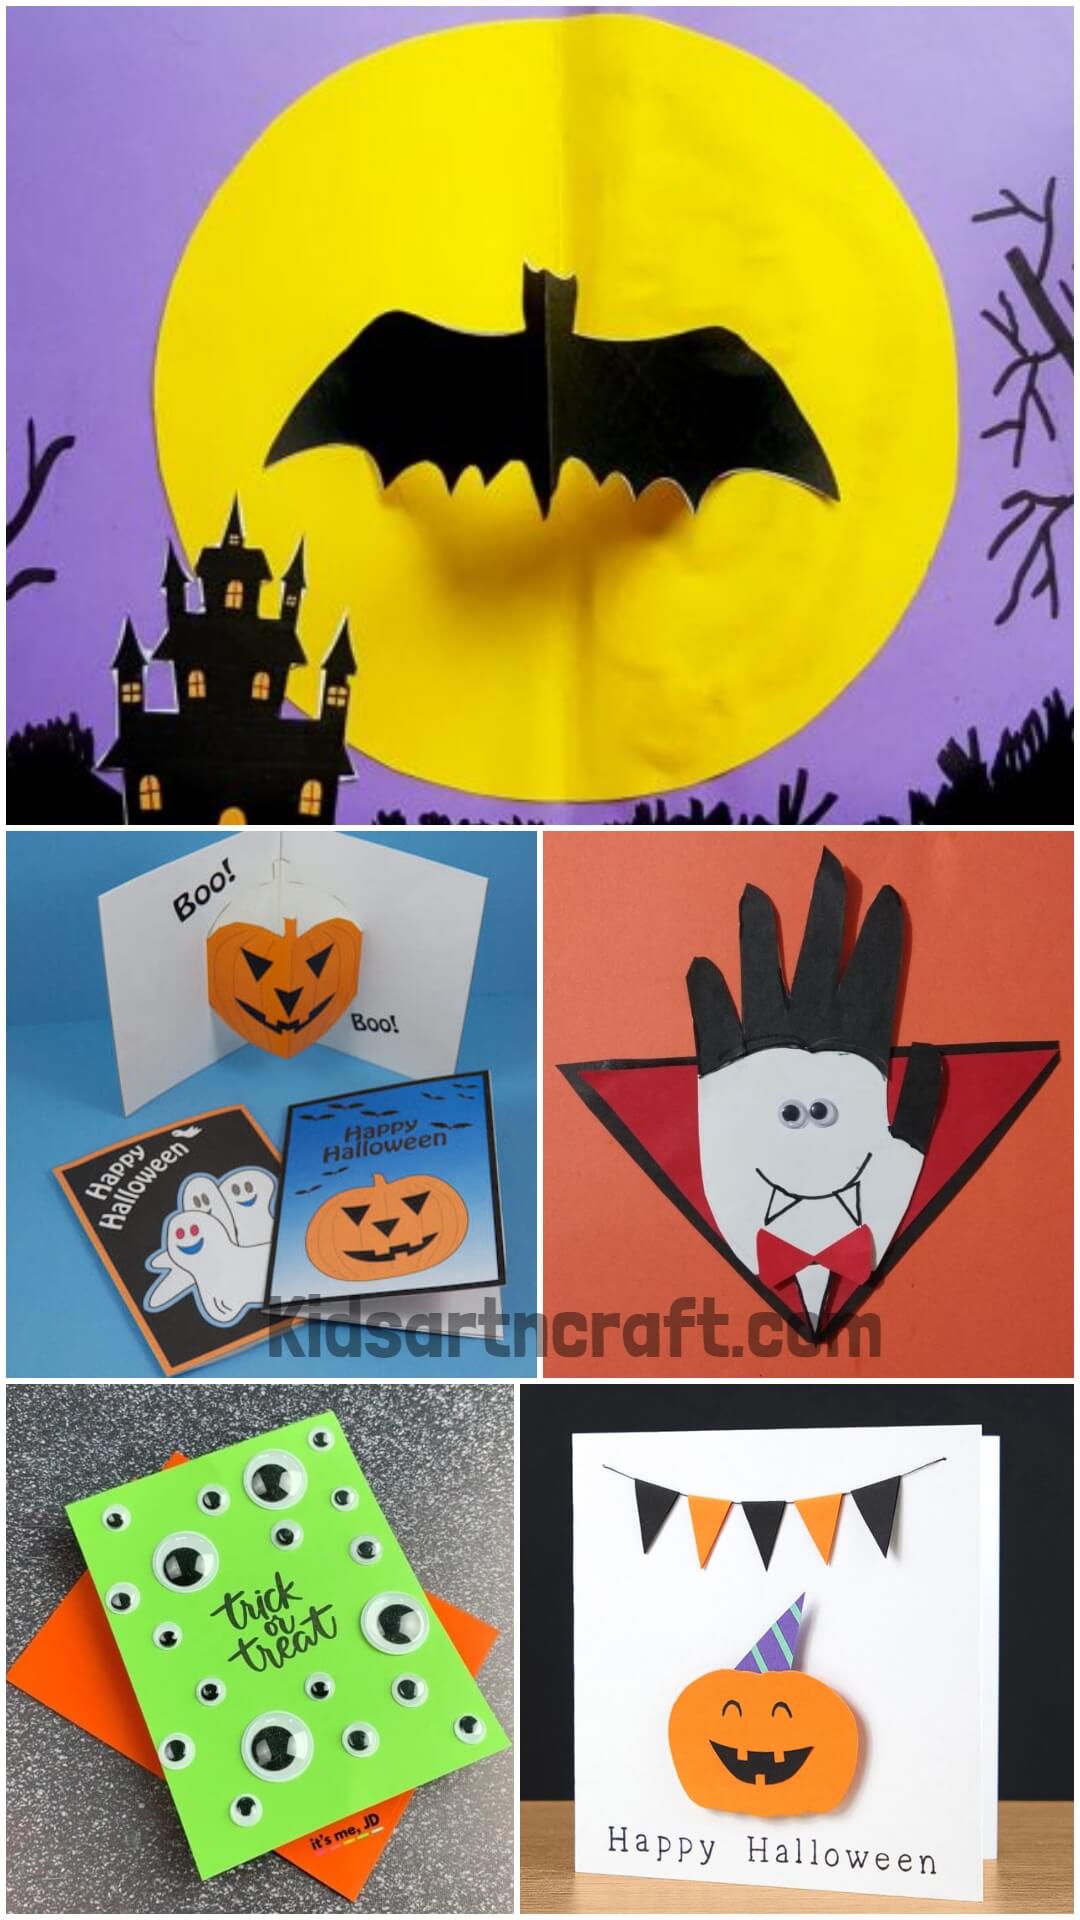  DIY Paper Card Ideas for Halloween